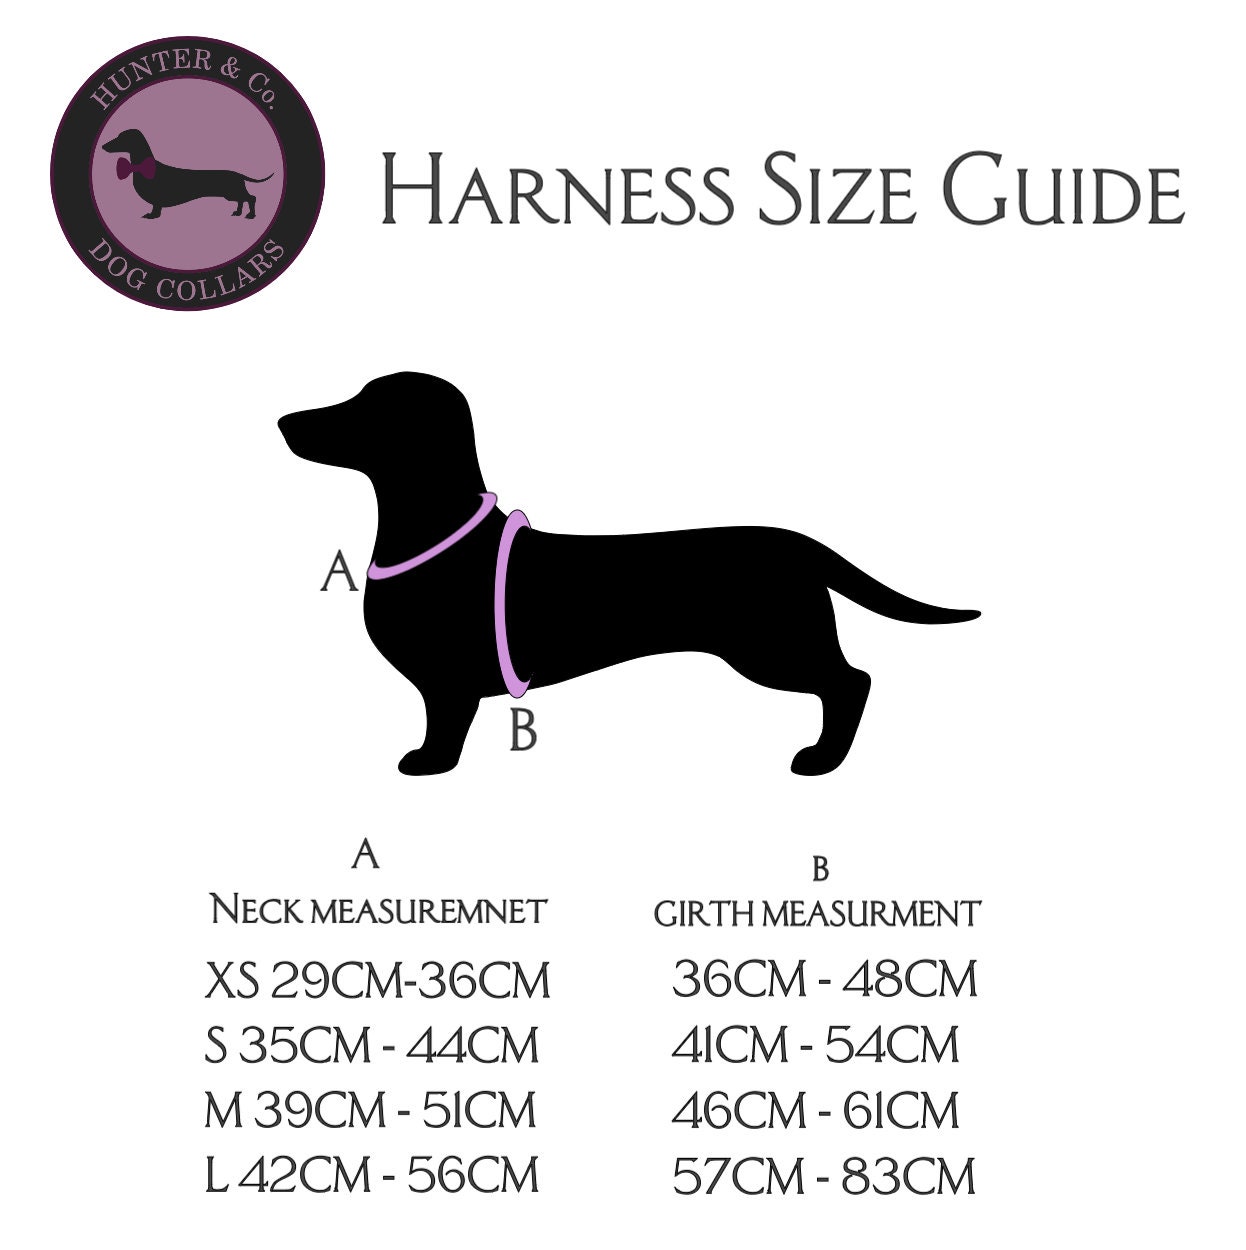 Luxury Dog Lead & Harness Set in Pink